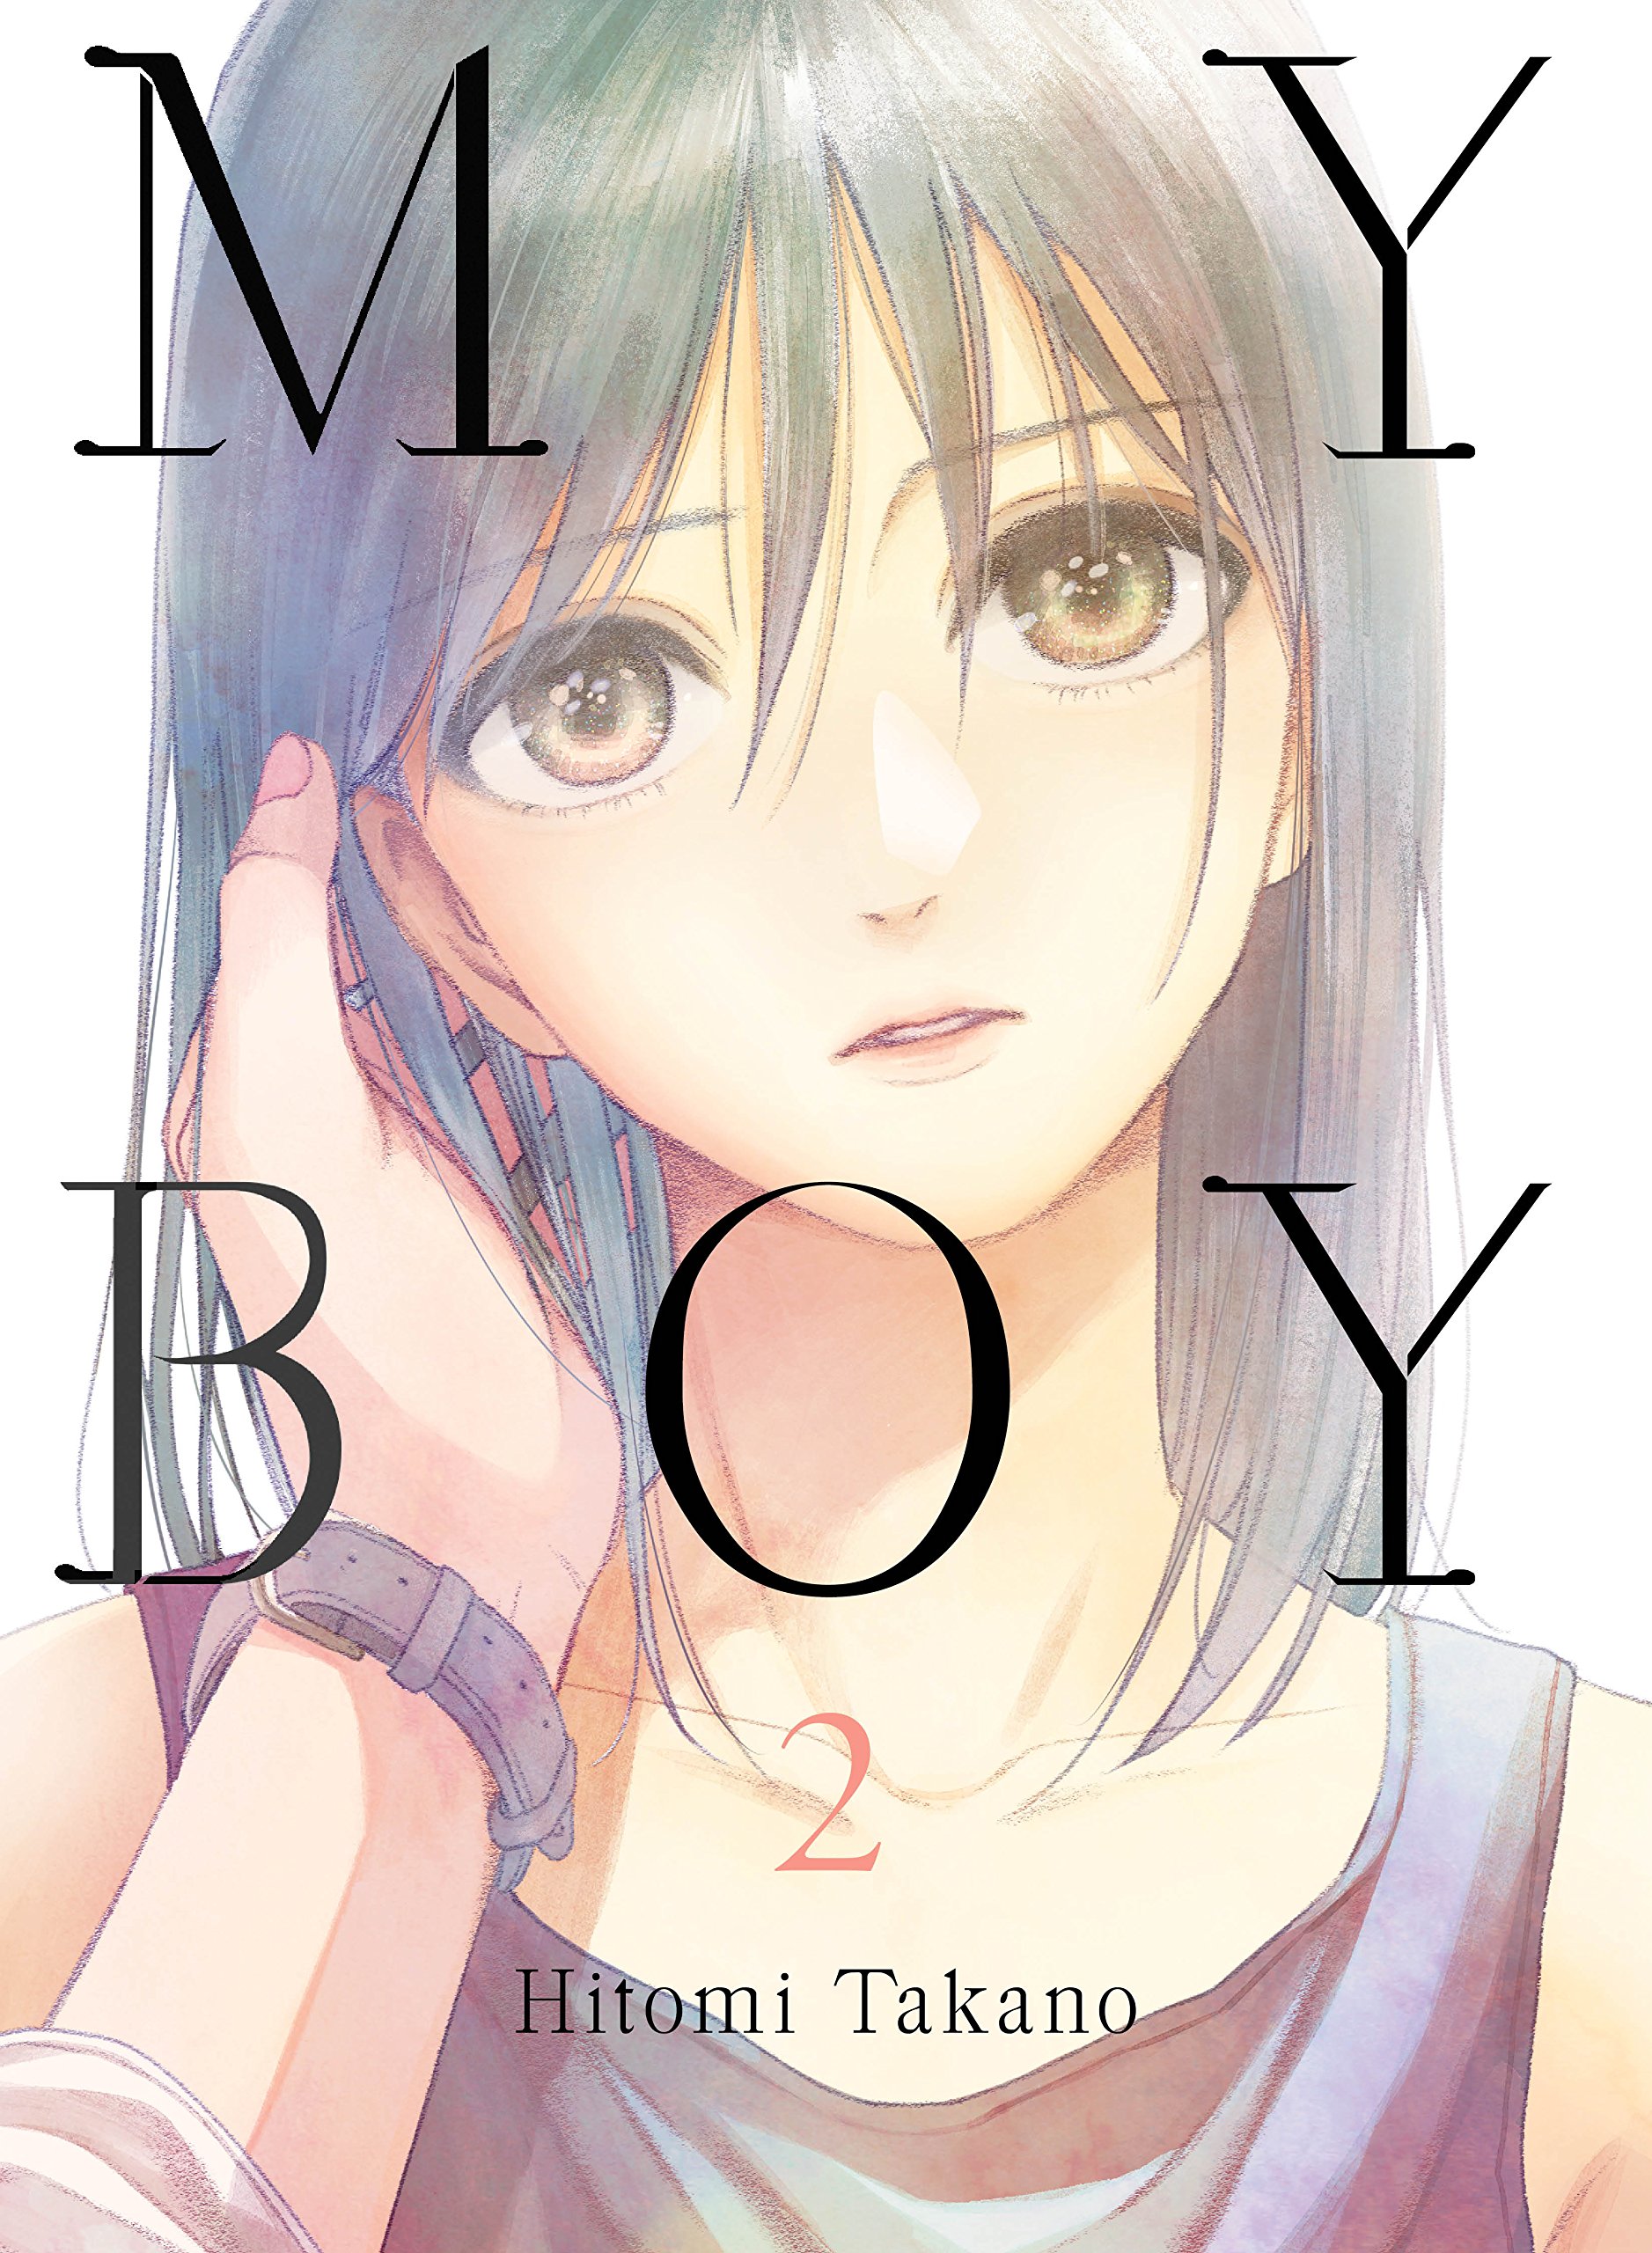 My Boy - Volume 2 | Hitomi Takano